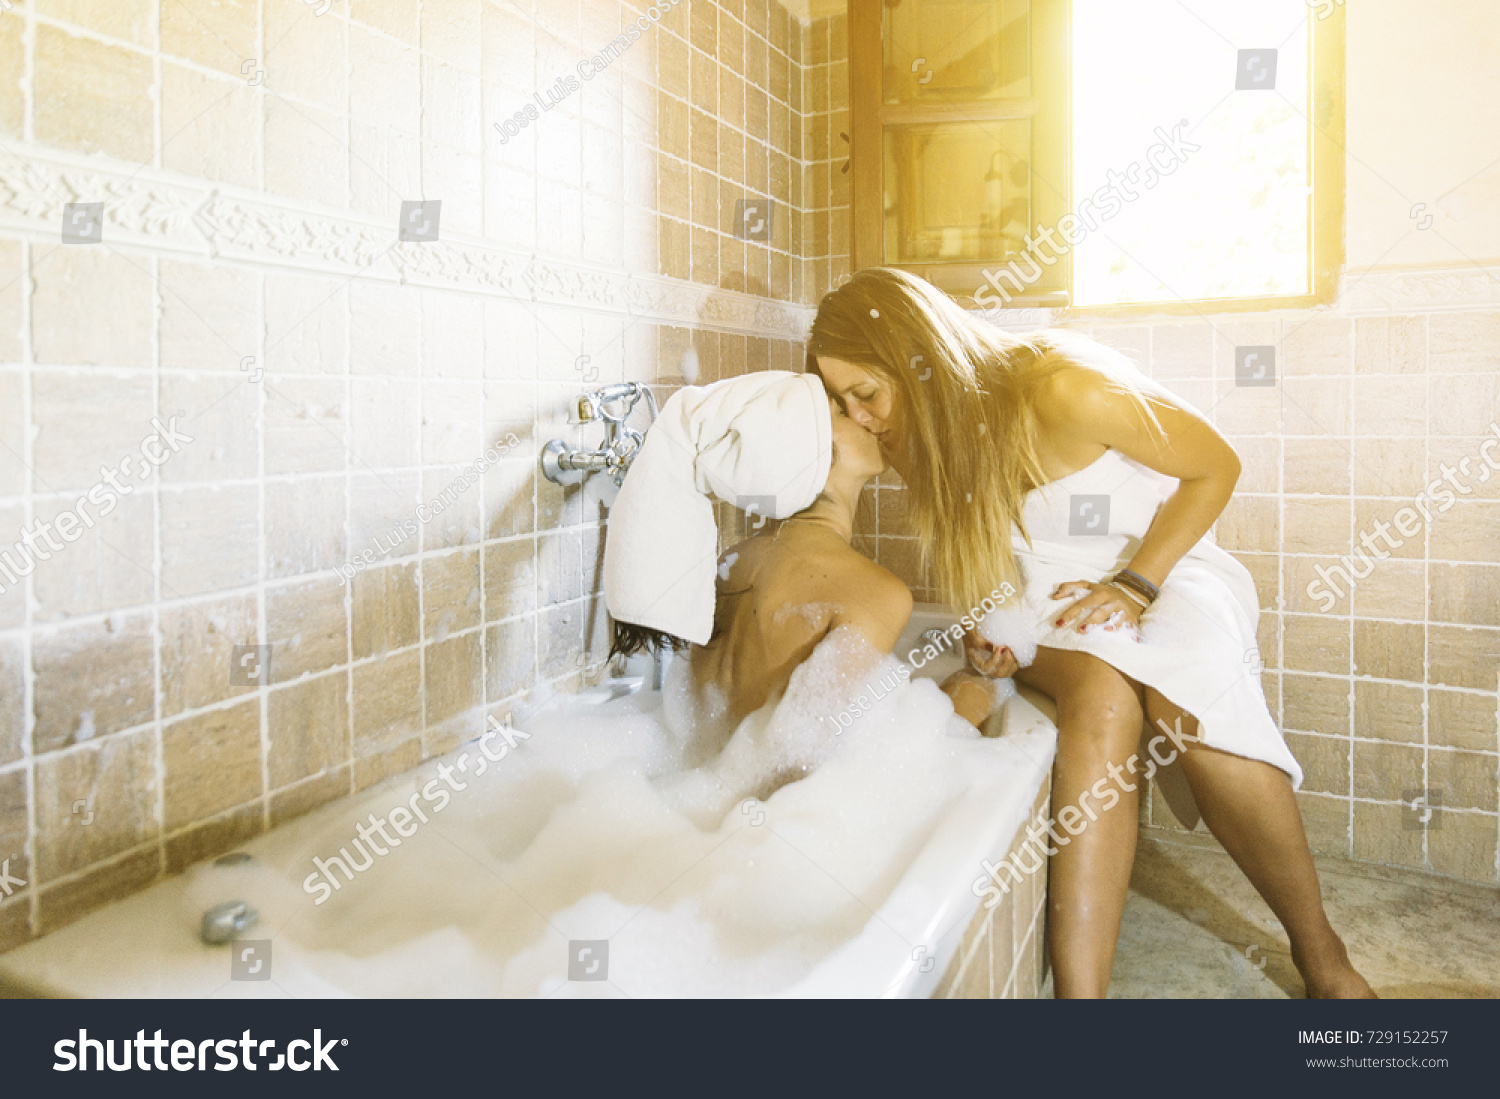 aimee bosley add hot lesbians in bathroom photo